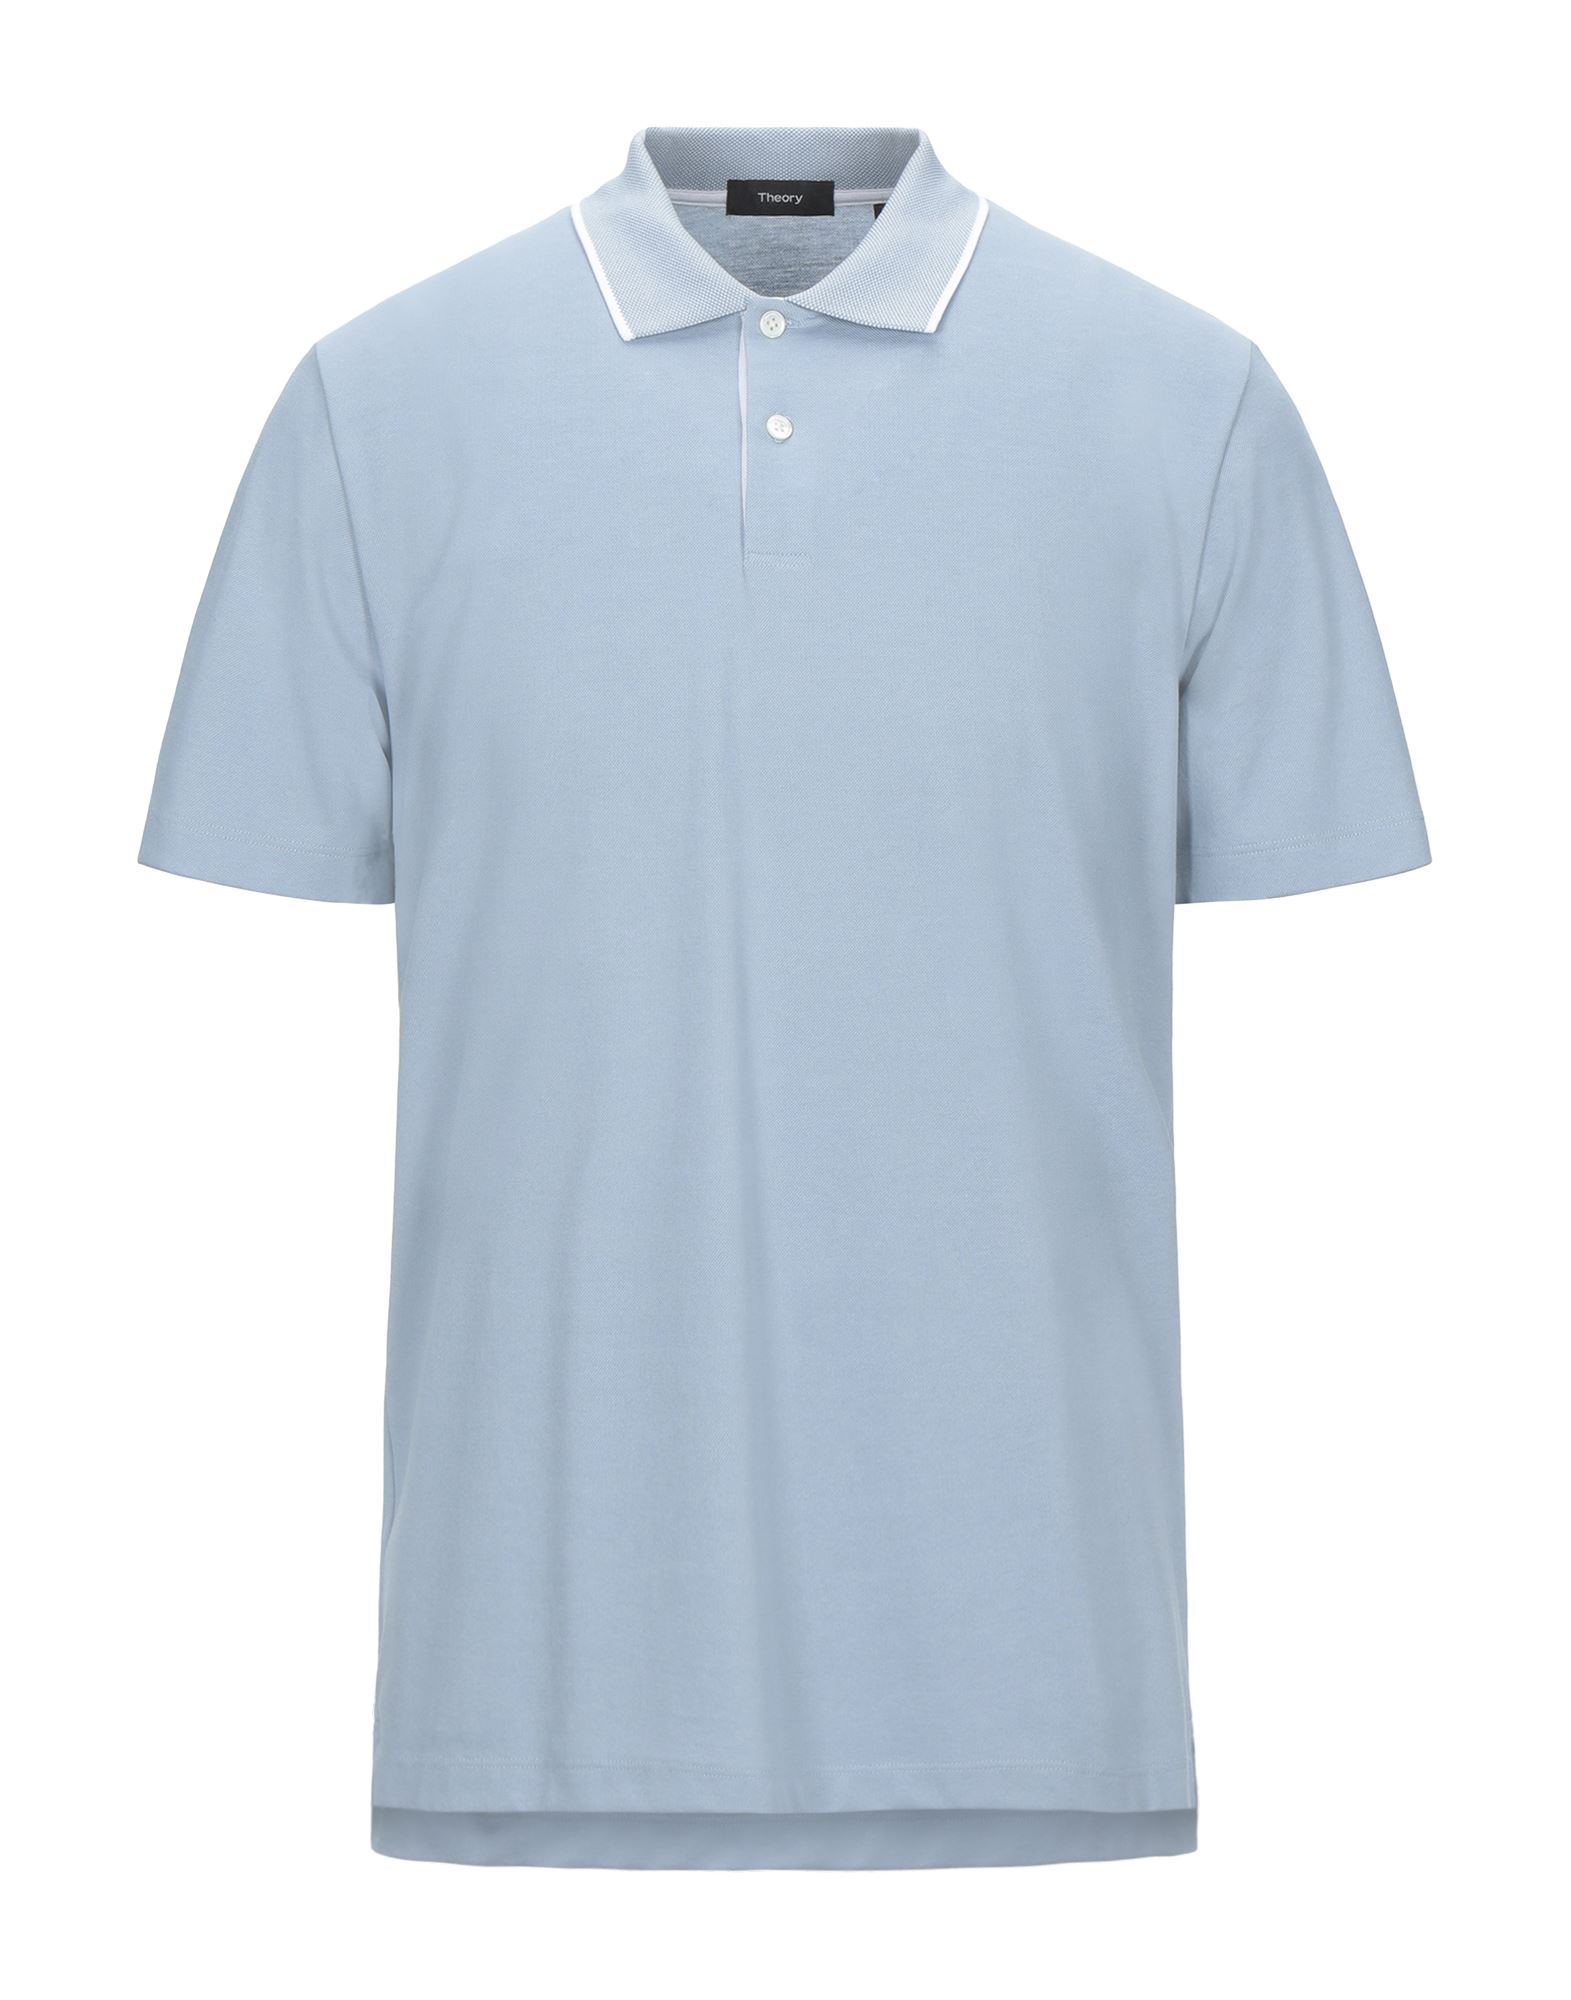 THEORY Polo shirts - Item 12529460